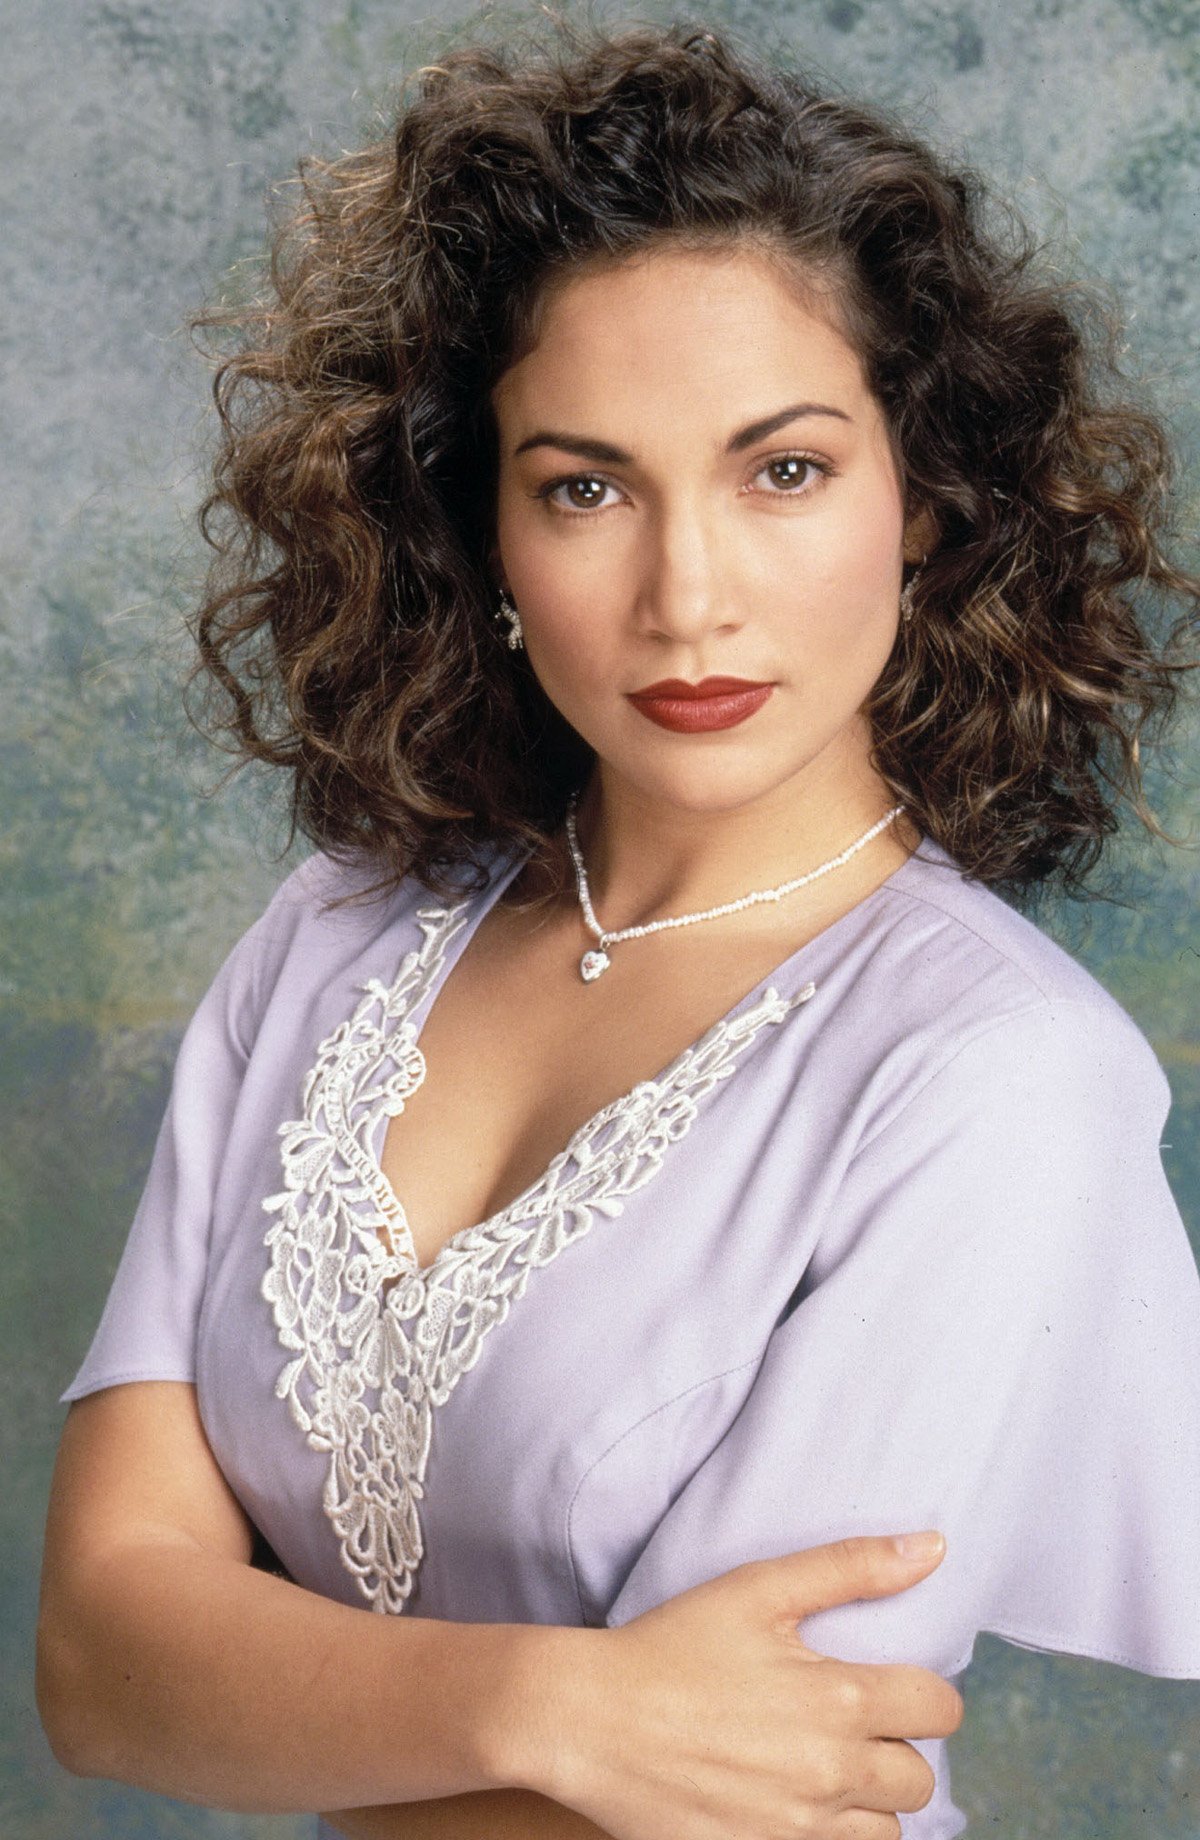 Jennifer Lopez fue fotografiada para la serie de televisión de CBS "Second Changes" en 1993. | Foto: Getty Images